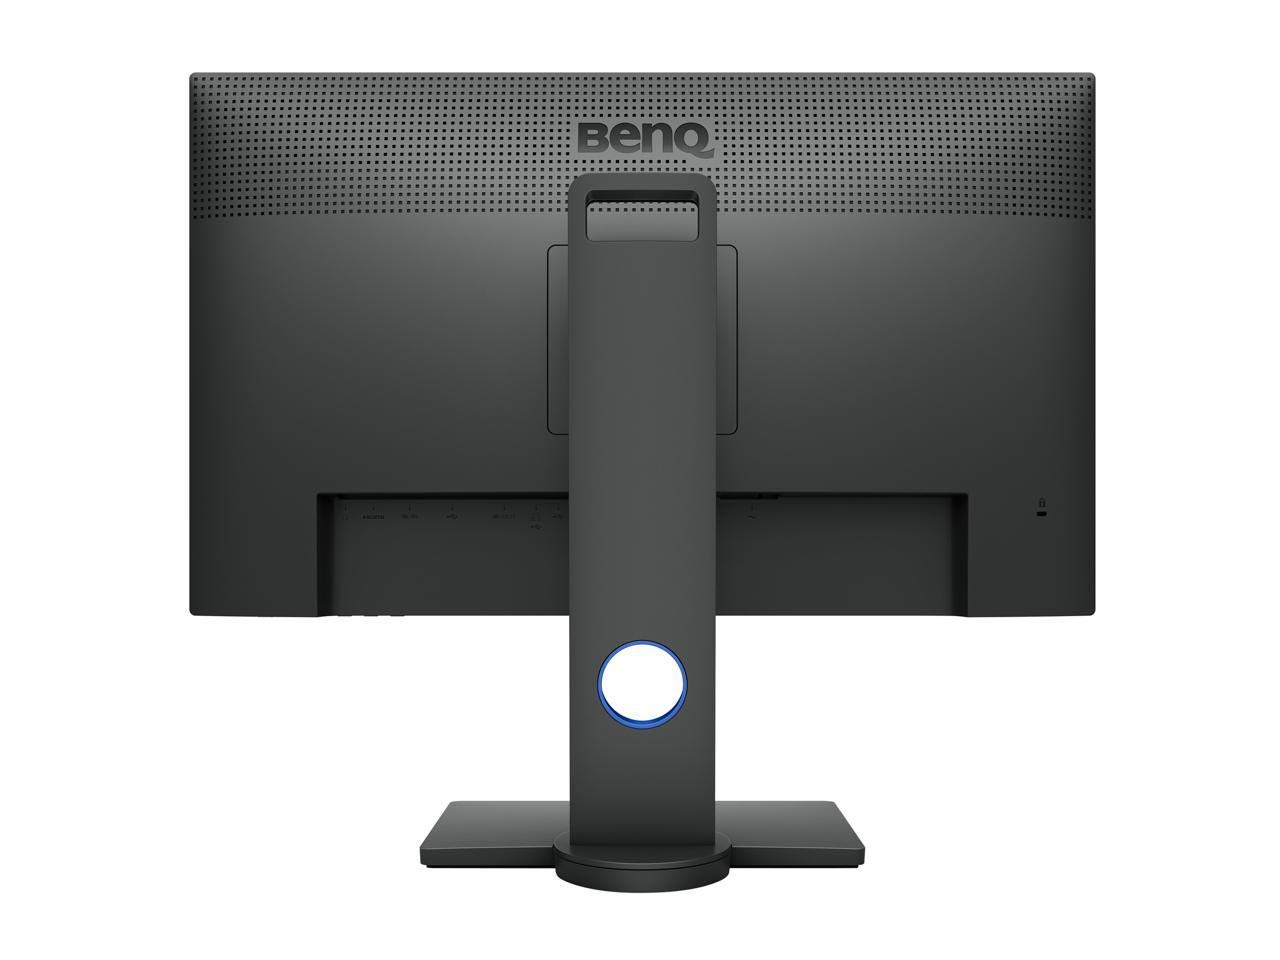 BenQ 27” 2K QHD Monitor, Commercial/Graphics Design, Video Editing (PD2705Q), 100% sRGB, HDR, Grey, 27